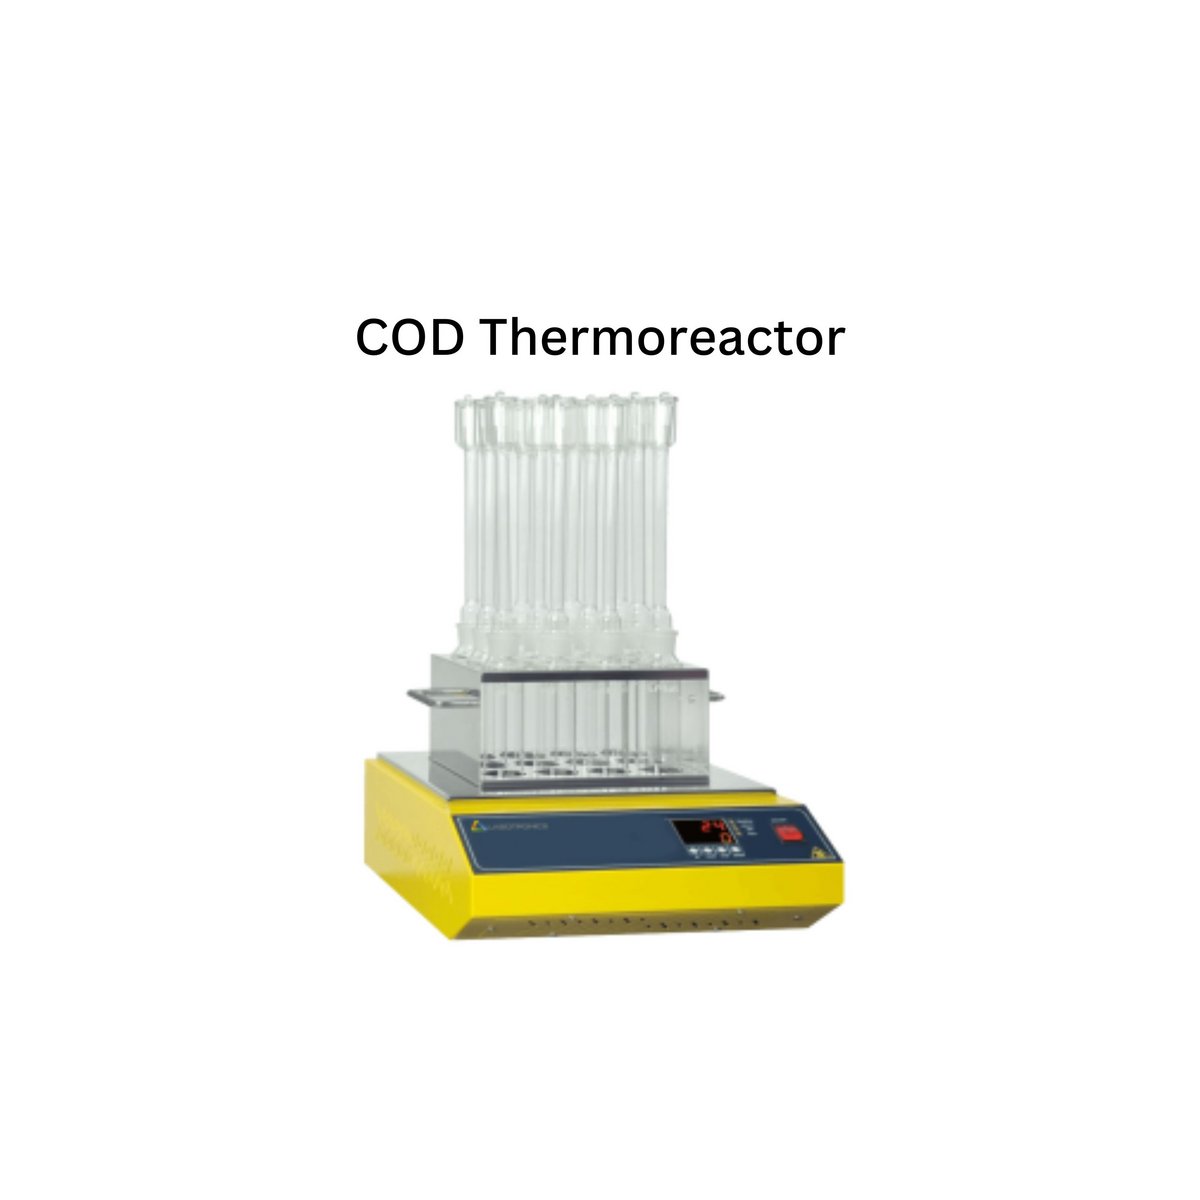 COD Thermoreactor 1.jpg